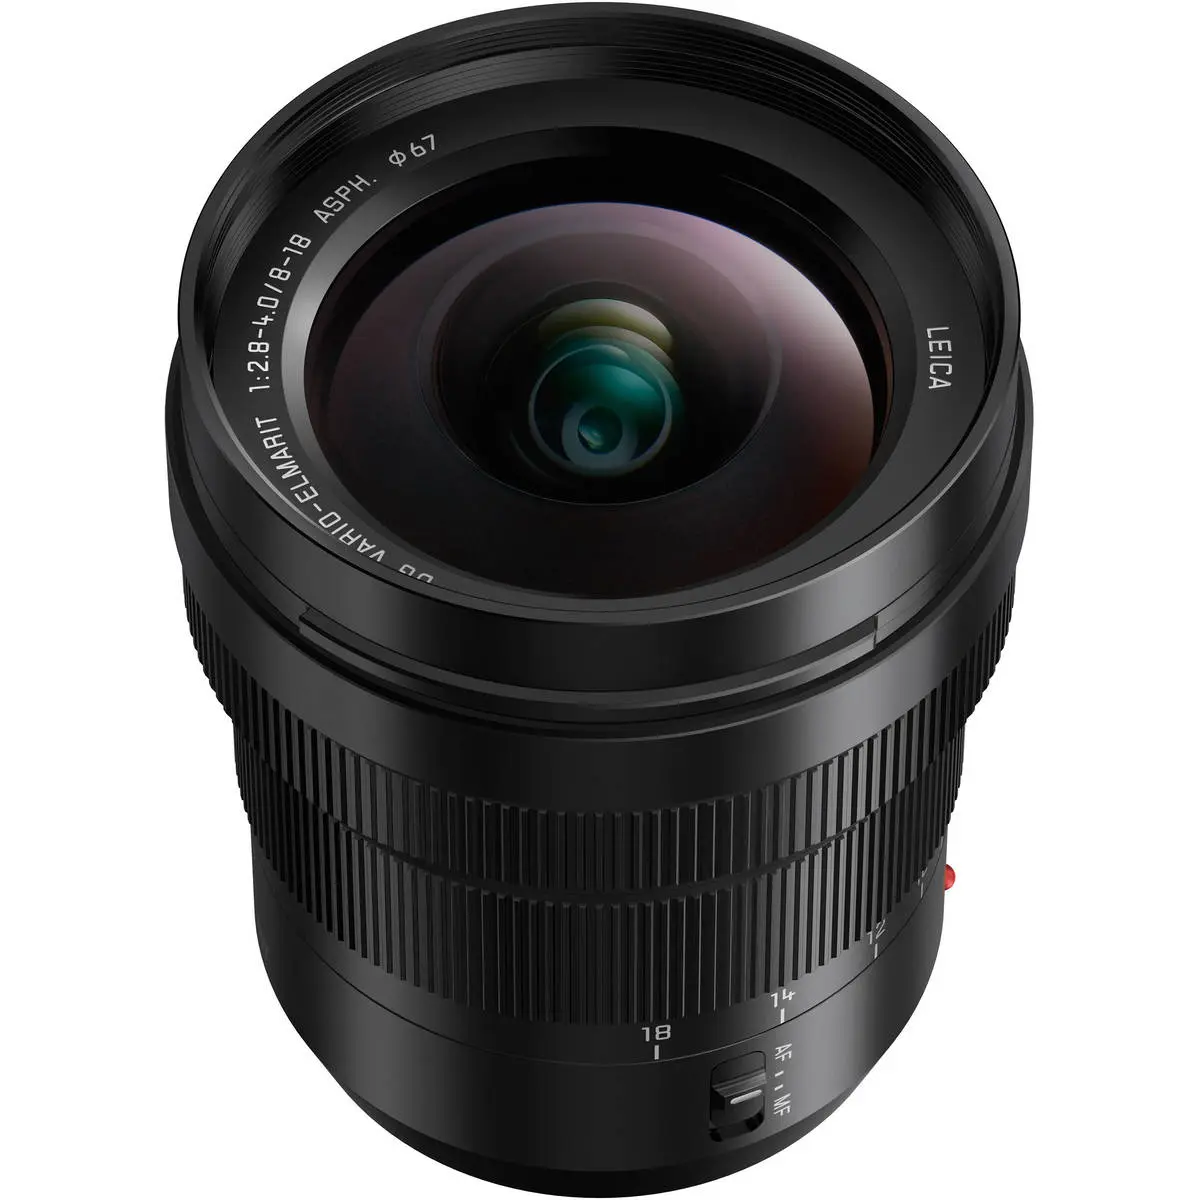 1. Panasonic Leica DG Elmarit 8-18mm f/2.8-4.0 Asph Lens